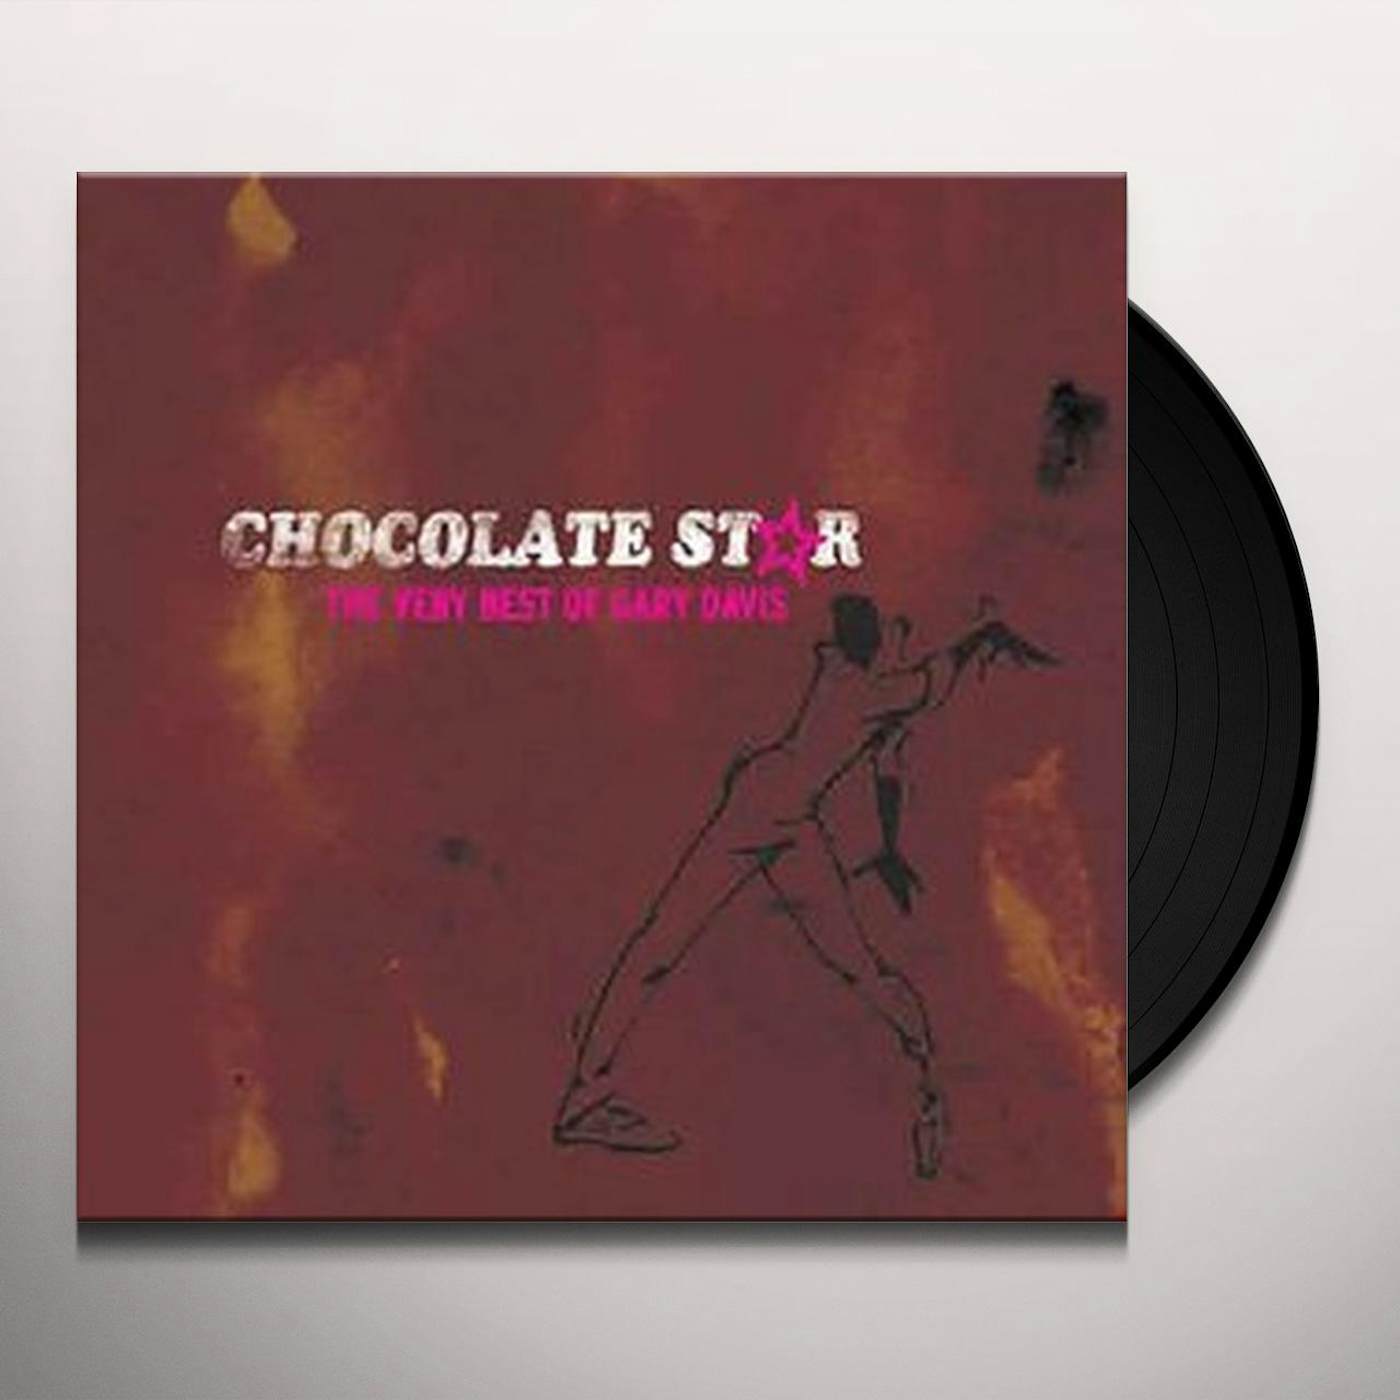 CHOCOLATE STAR THE VERY BEST OF GARY DAVIS Vinyl Record